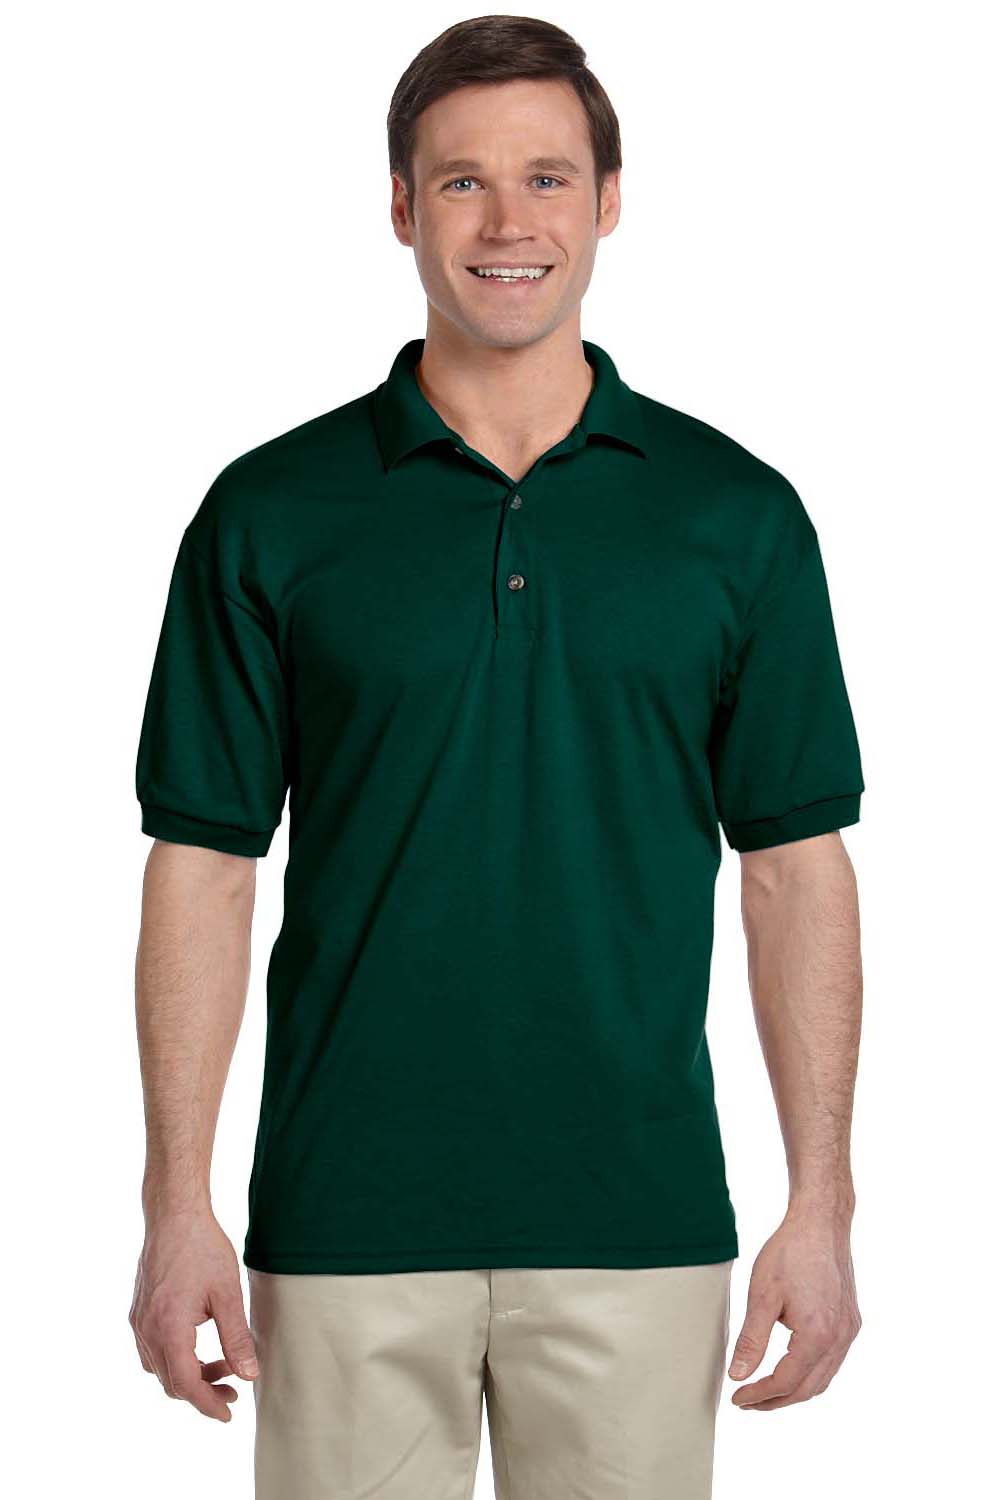 8800 Gildan Dry Blend Adult Polo T-shirt